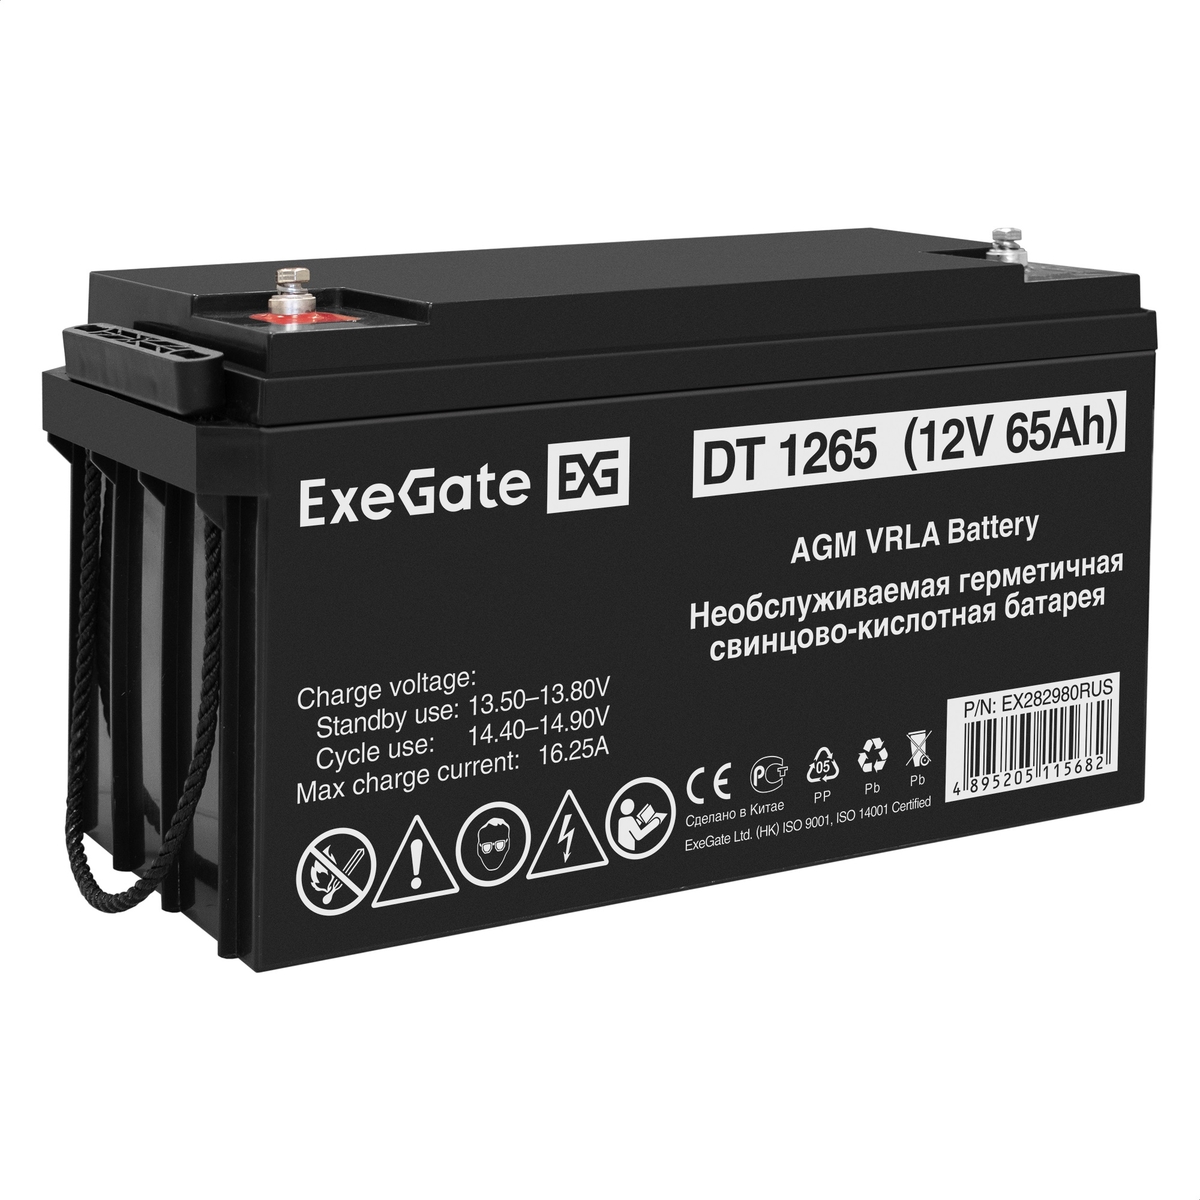 UPS set EX295998 + battery 65Ah EX282980 2 piece